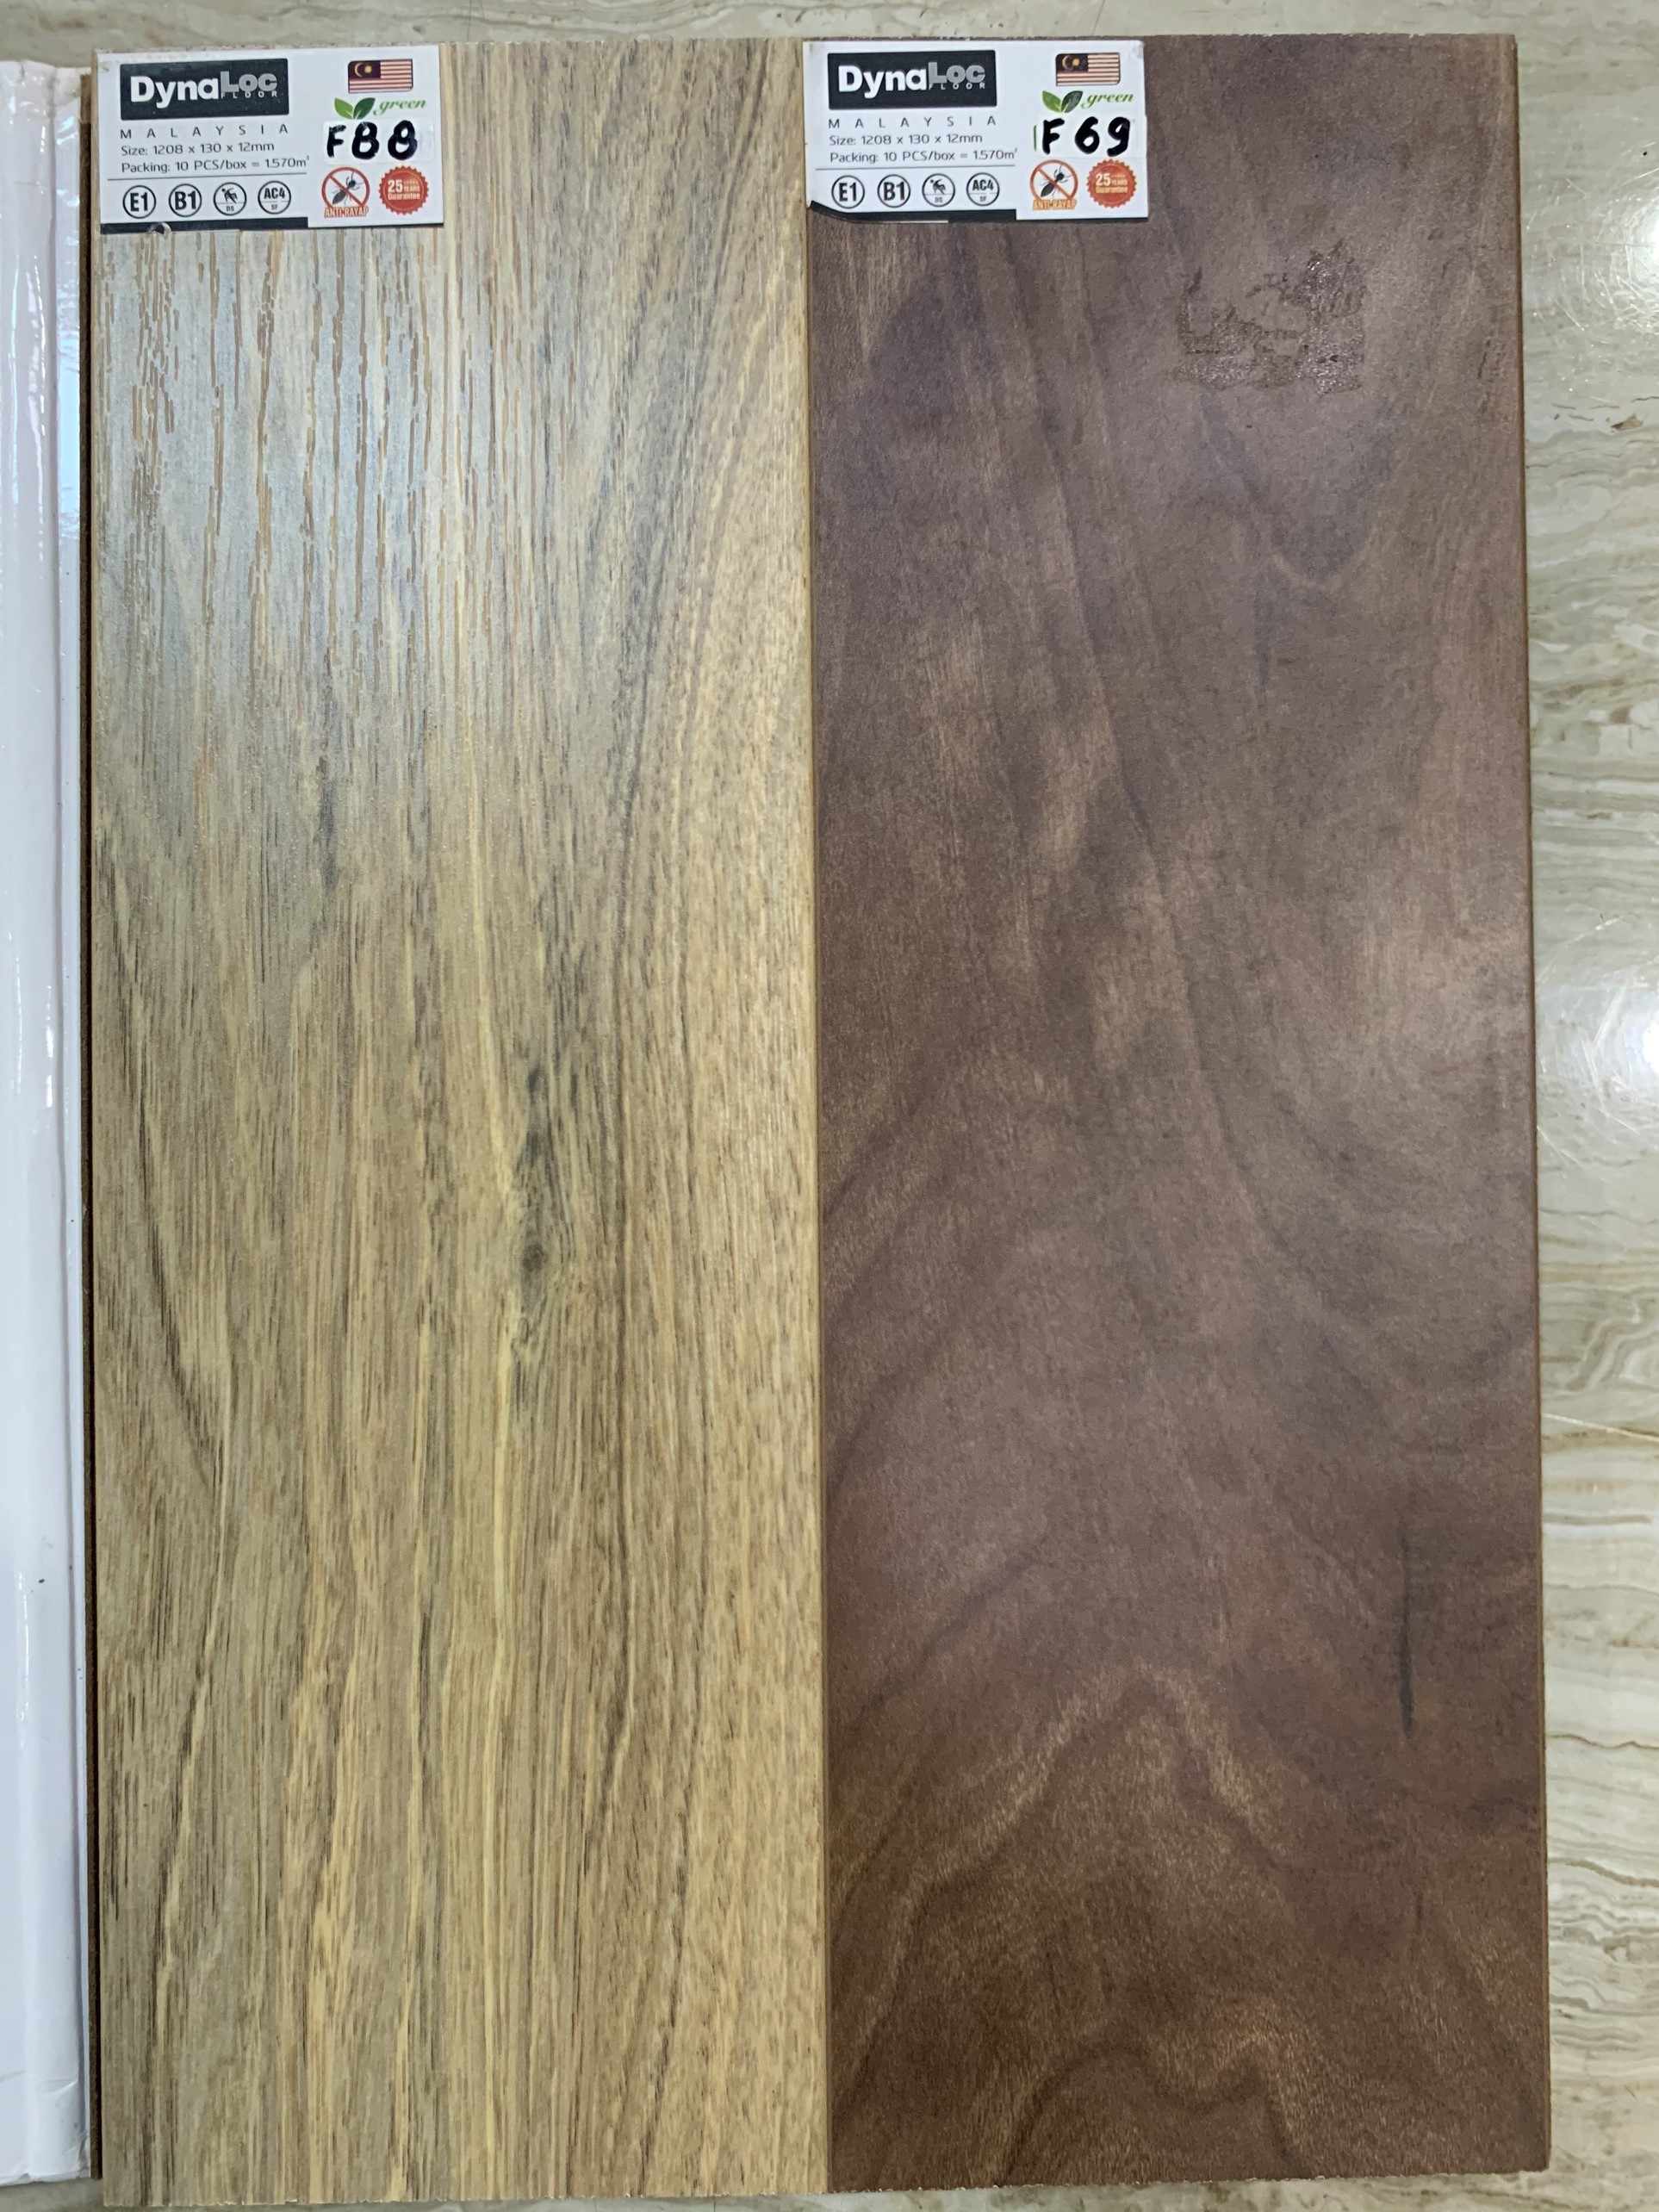 Sàn gỗ DYNALOC 12mm  F88-F69